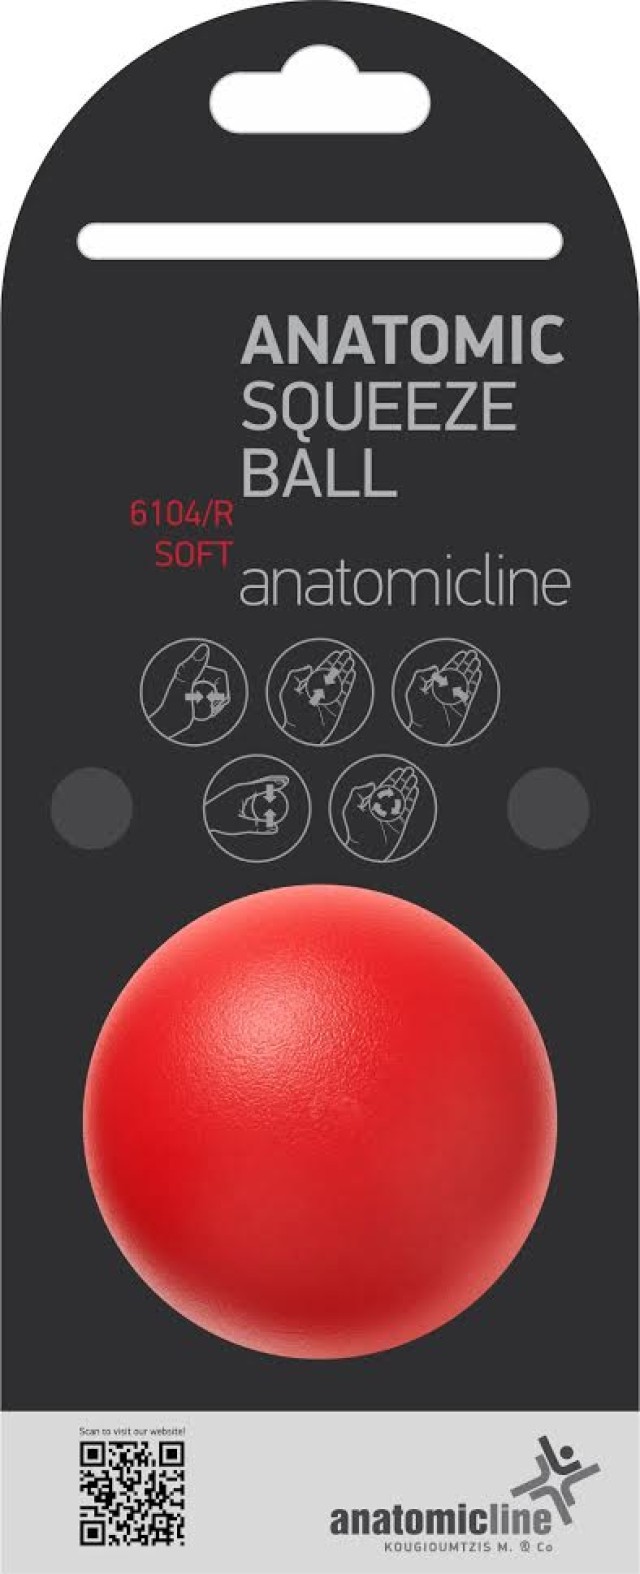 Anatomic Line Squeeze Ball Soft Μπαλάκι Ασκήσεως Χειρός Μαλακό [6104/R] Χρώμα:Κόκκινο 1 Τεμάχιο